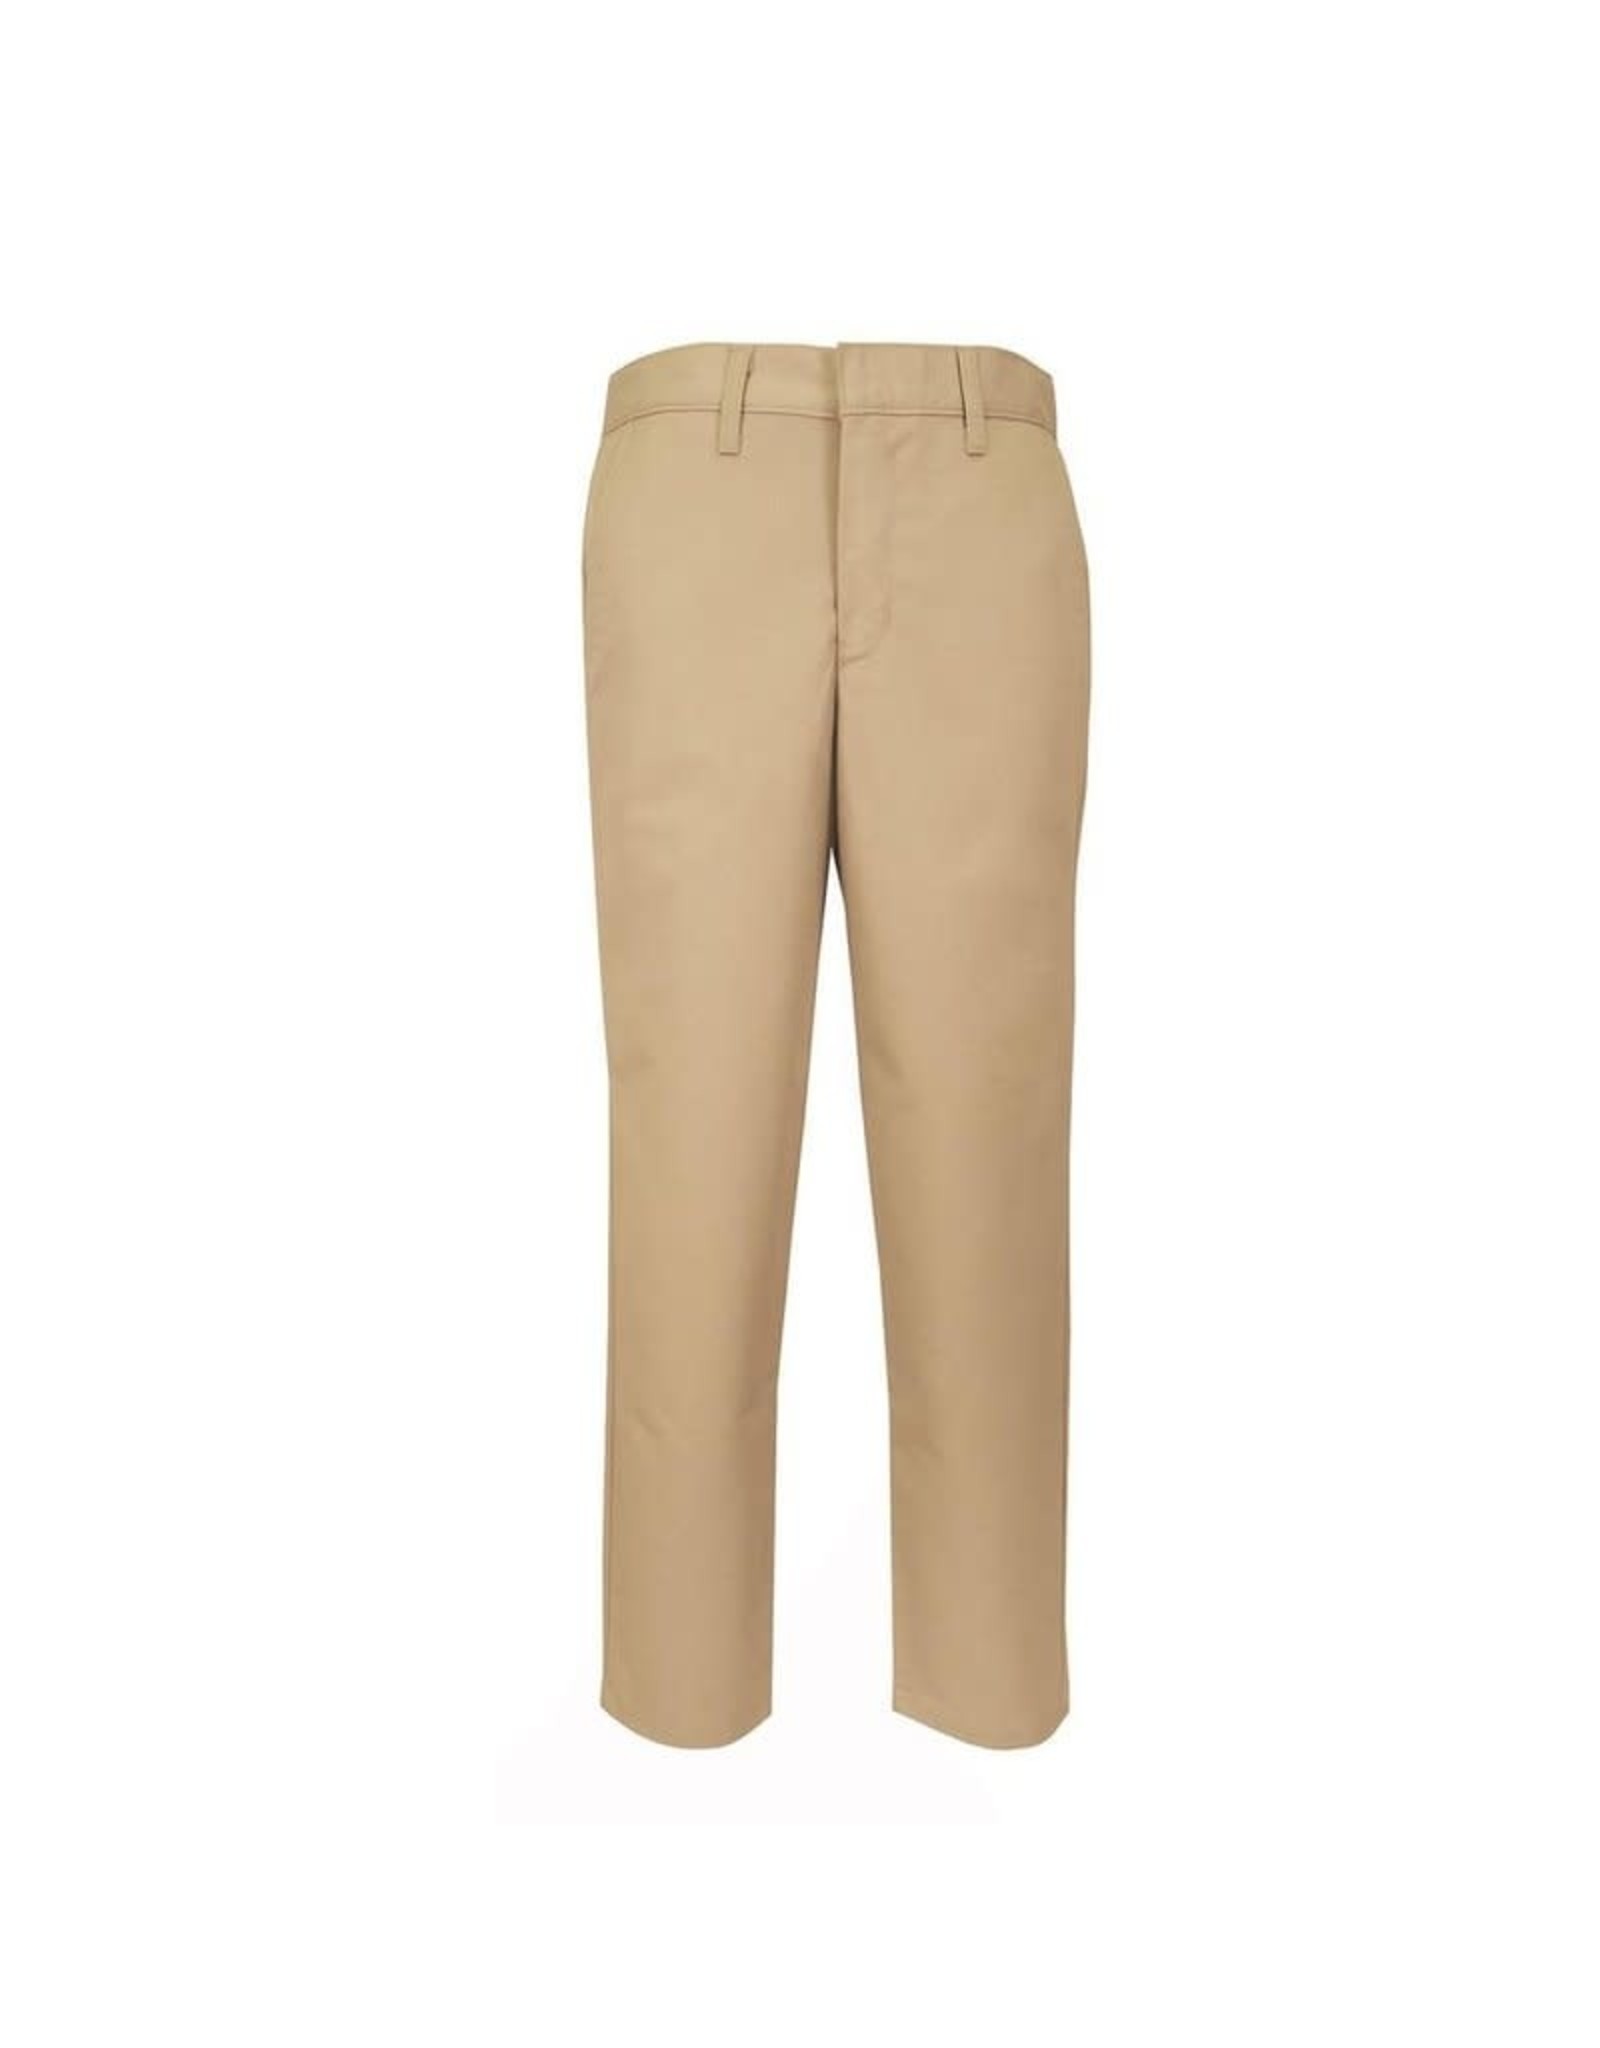 UNIFORM Girls Khaki Pants-New Style